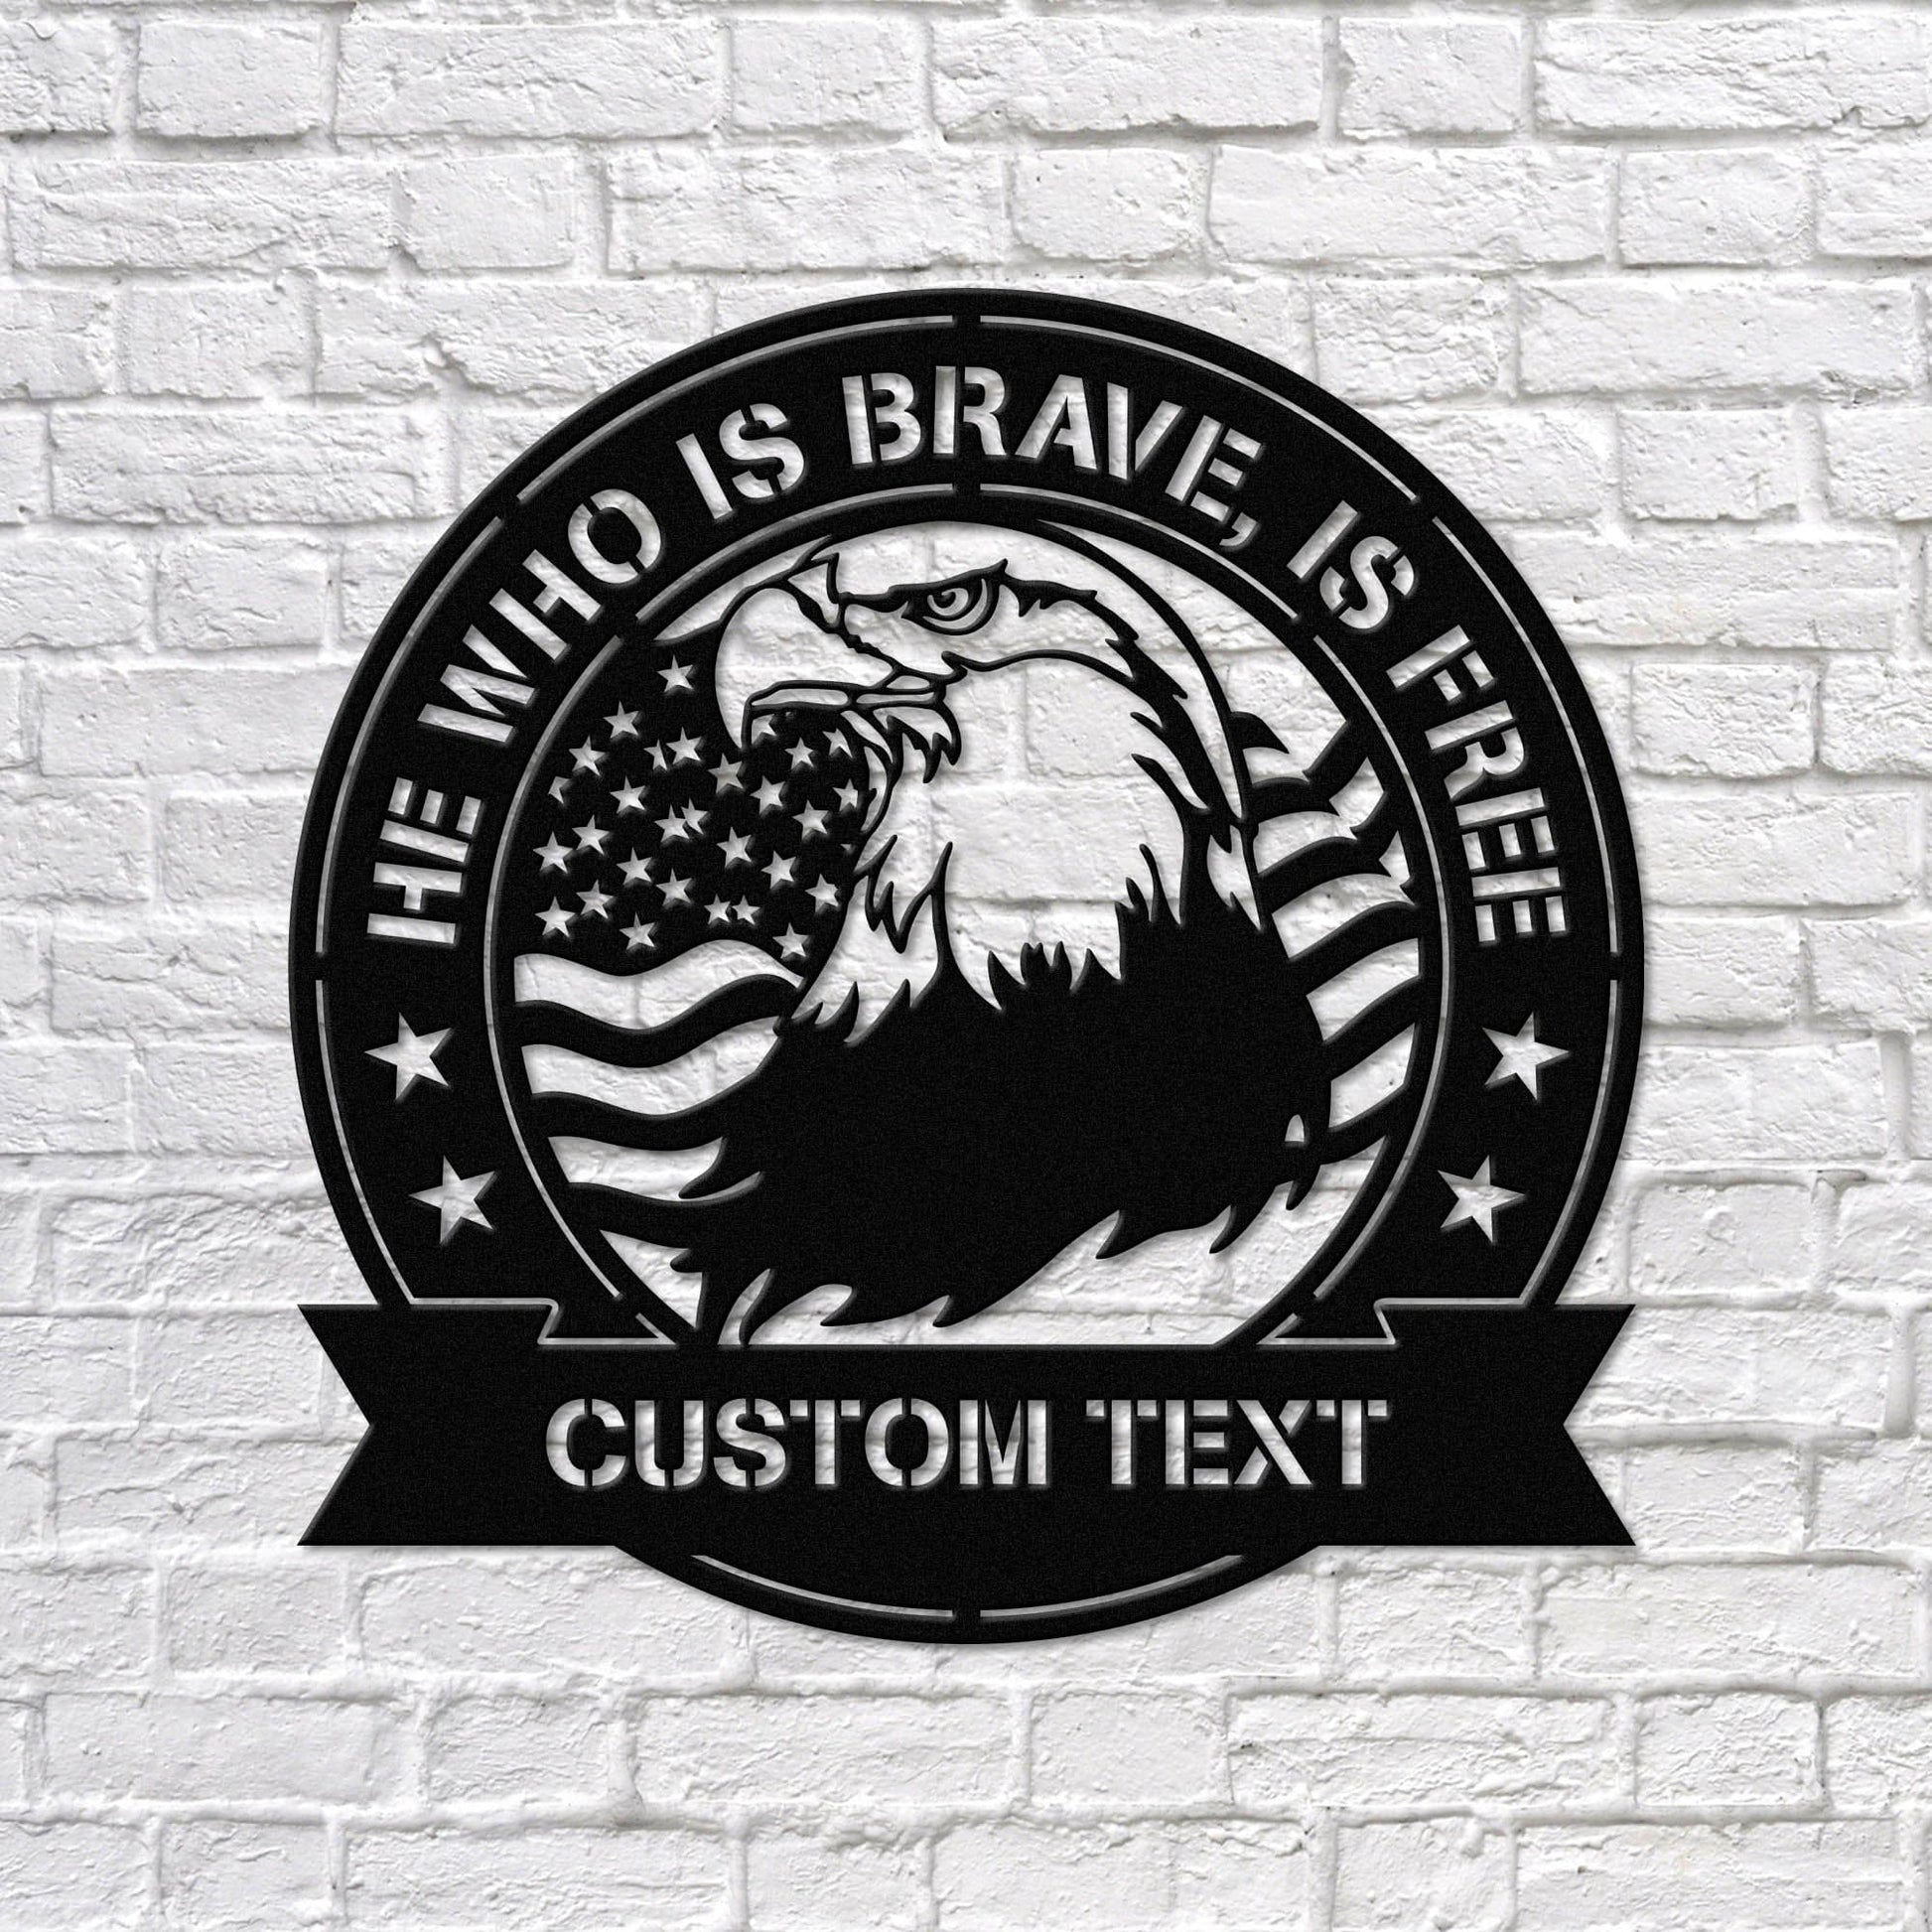 He Who Is Brave Personalized Veteran Metal Wall Art - Custom Metal Sign - Gift For Veteran